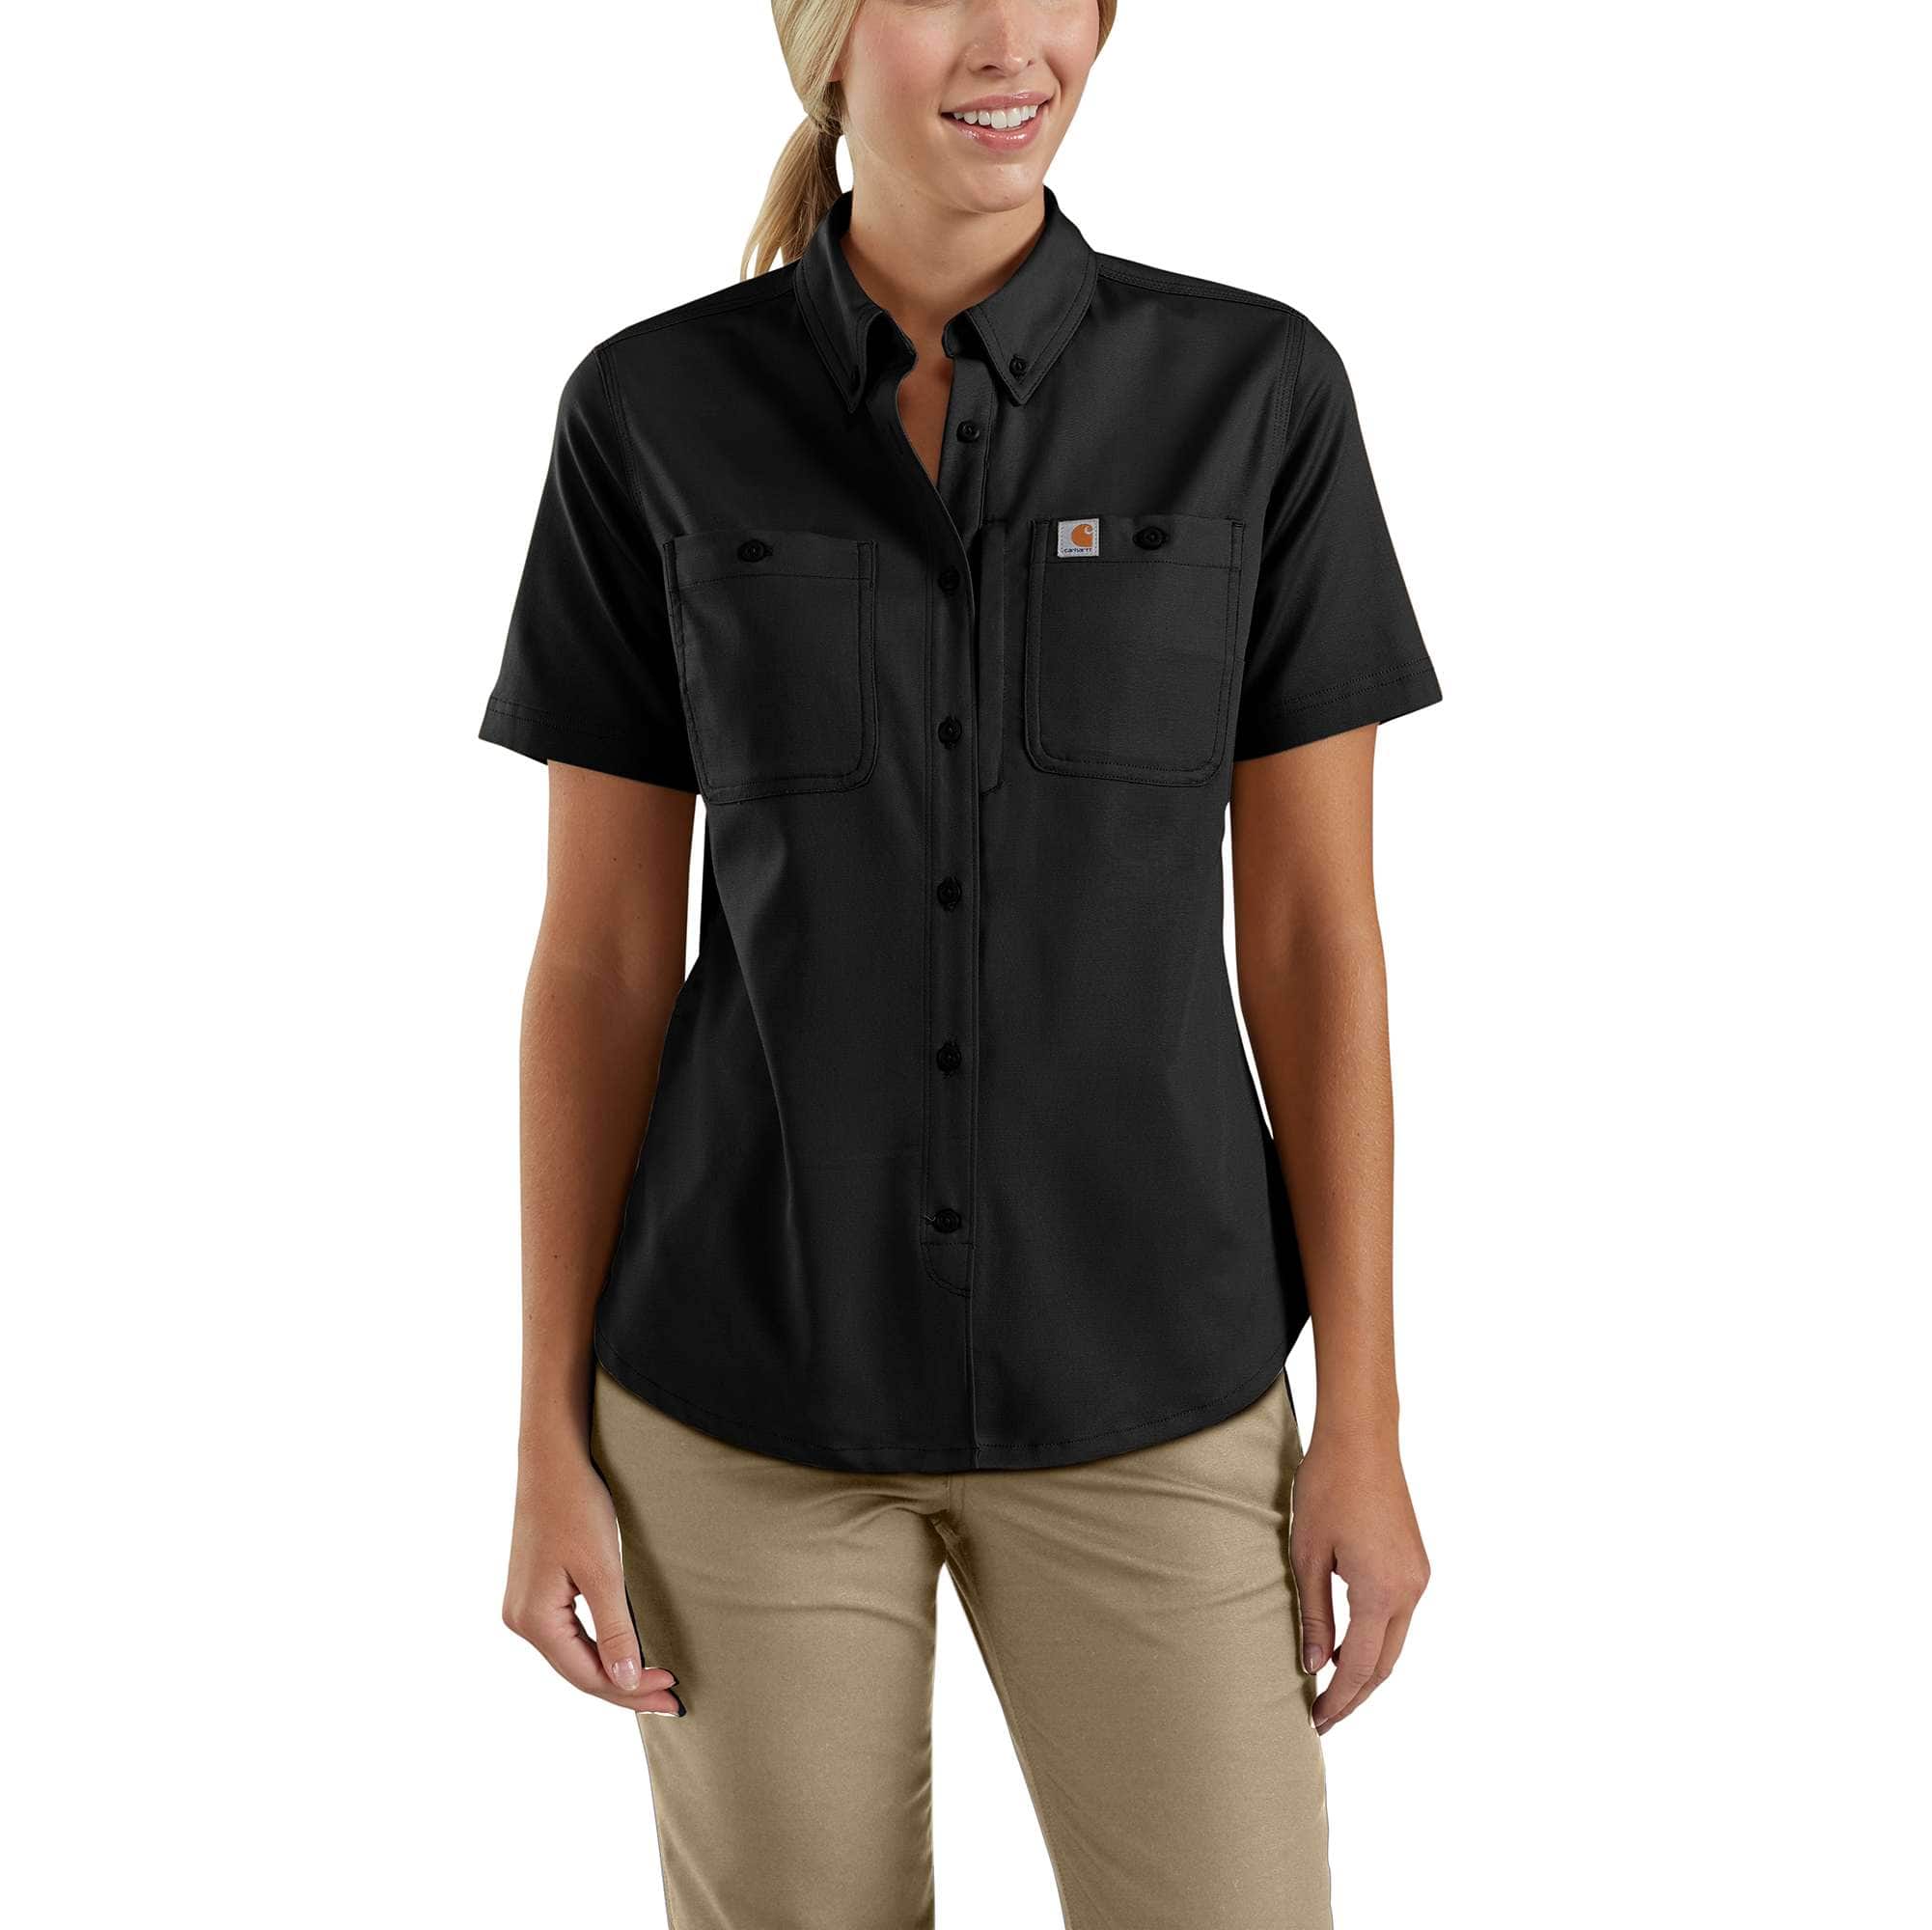 All Uniform Shirts | Carhartt Company Gear